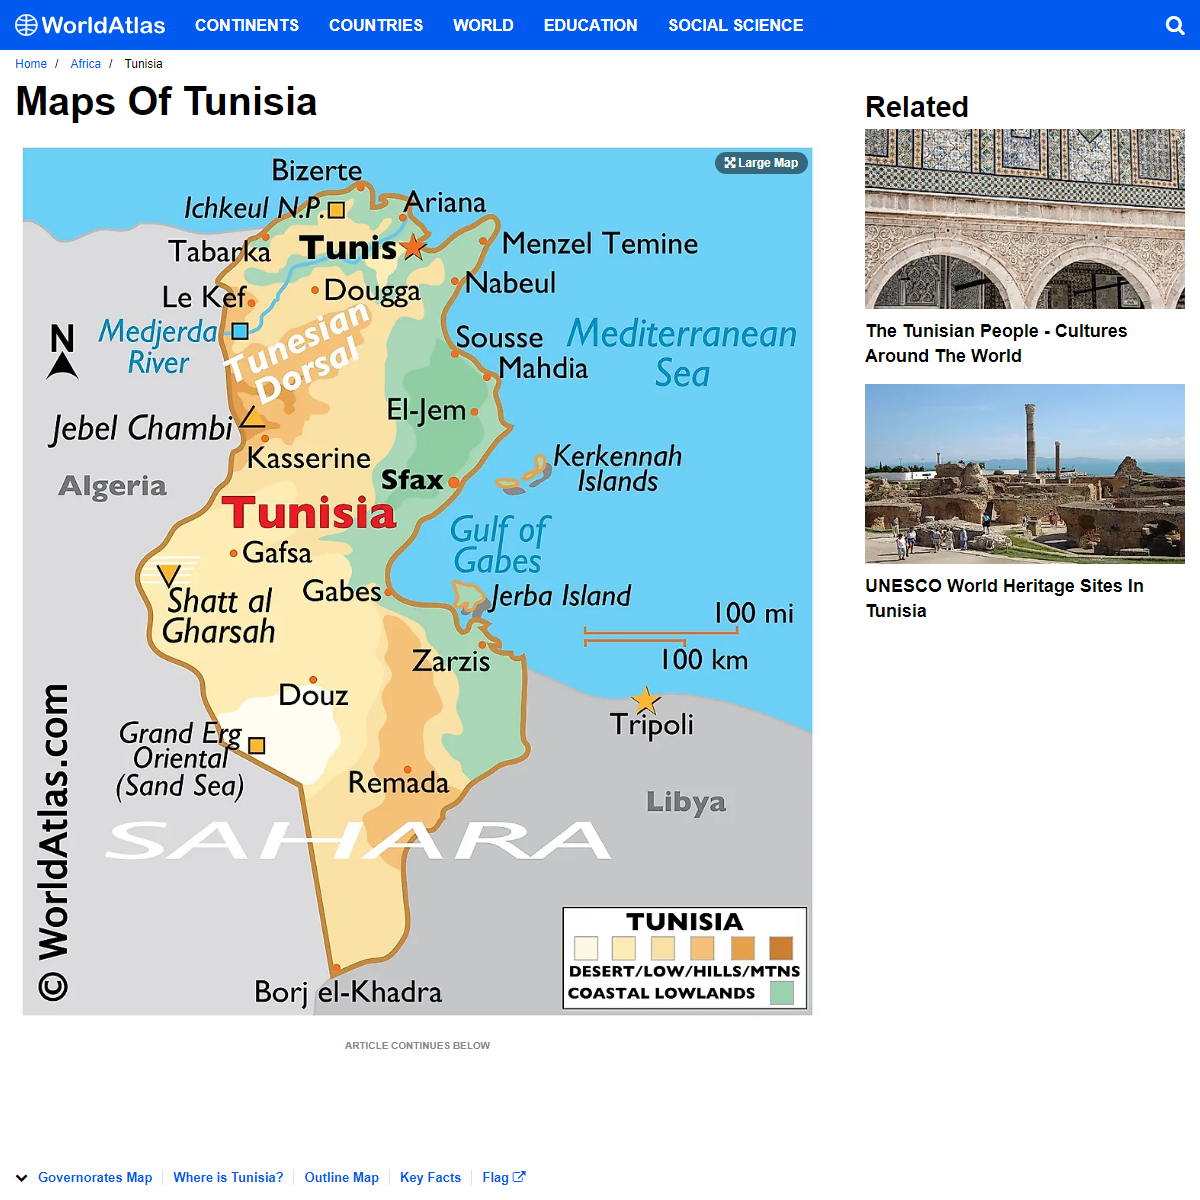 A complete backup of https://www.worldatlas.com/maps/tunisia